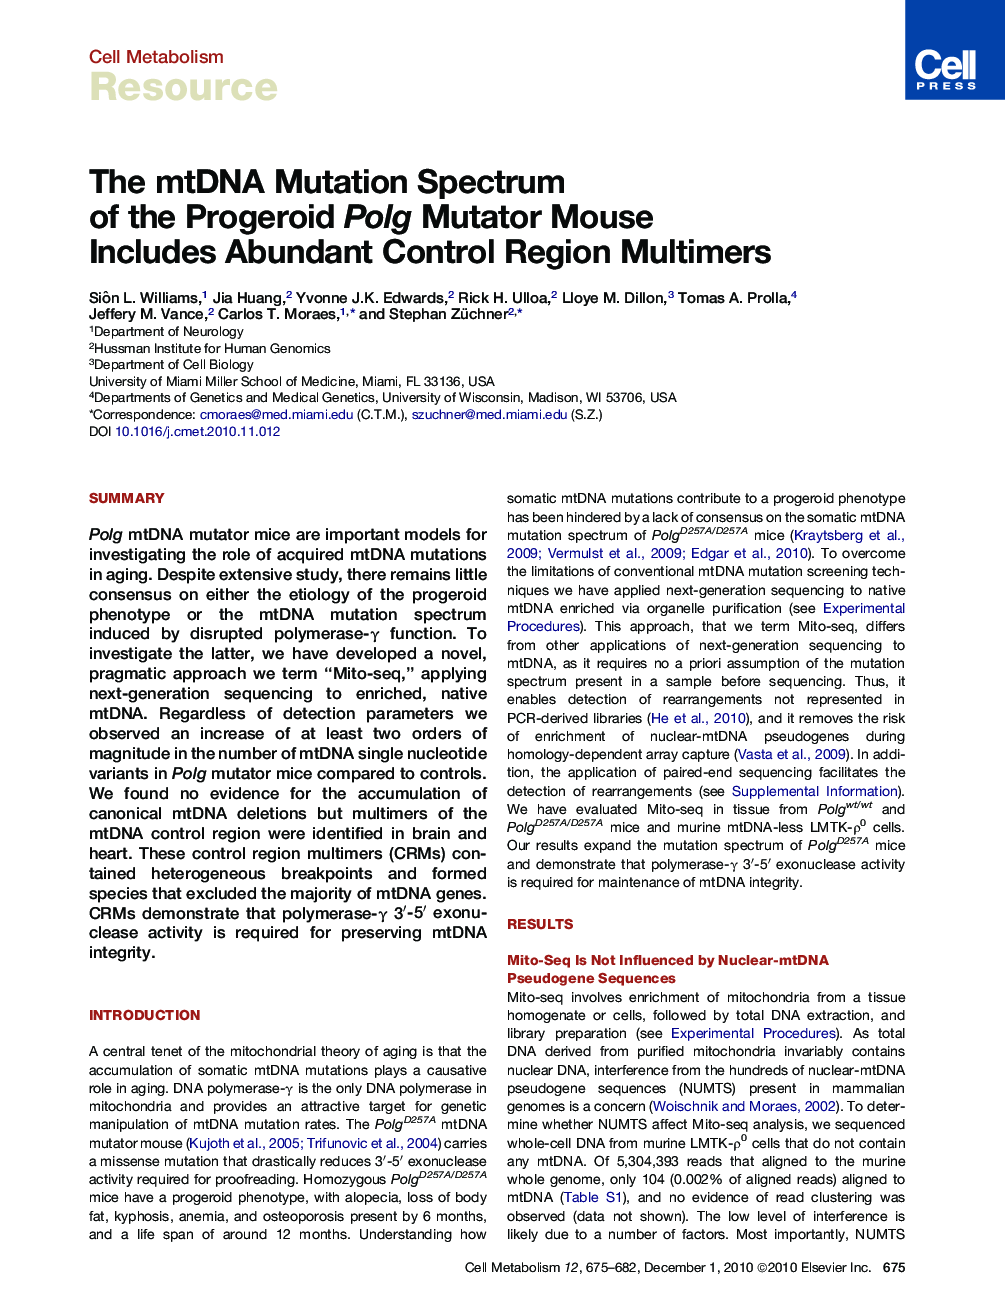 The mtDNA Mutation Spectrum of the Progeroid Polg Mutator Mouse Includes Abundant Control Region Multimers